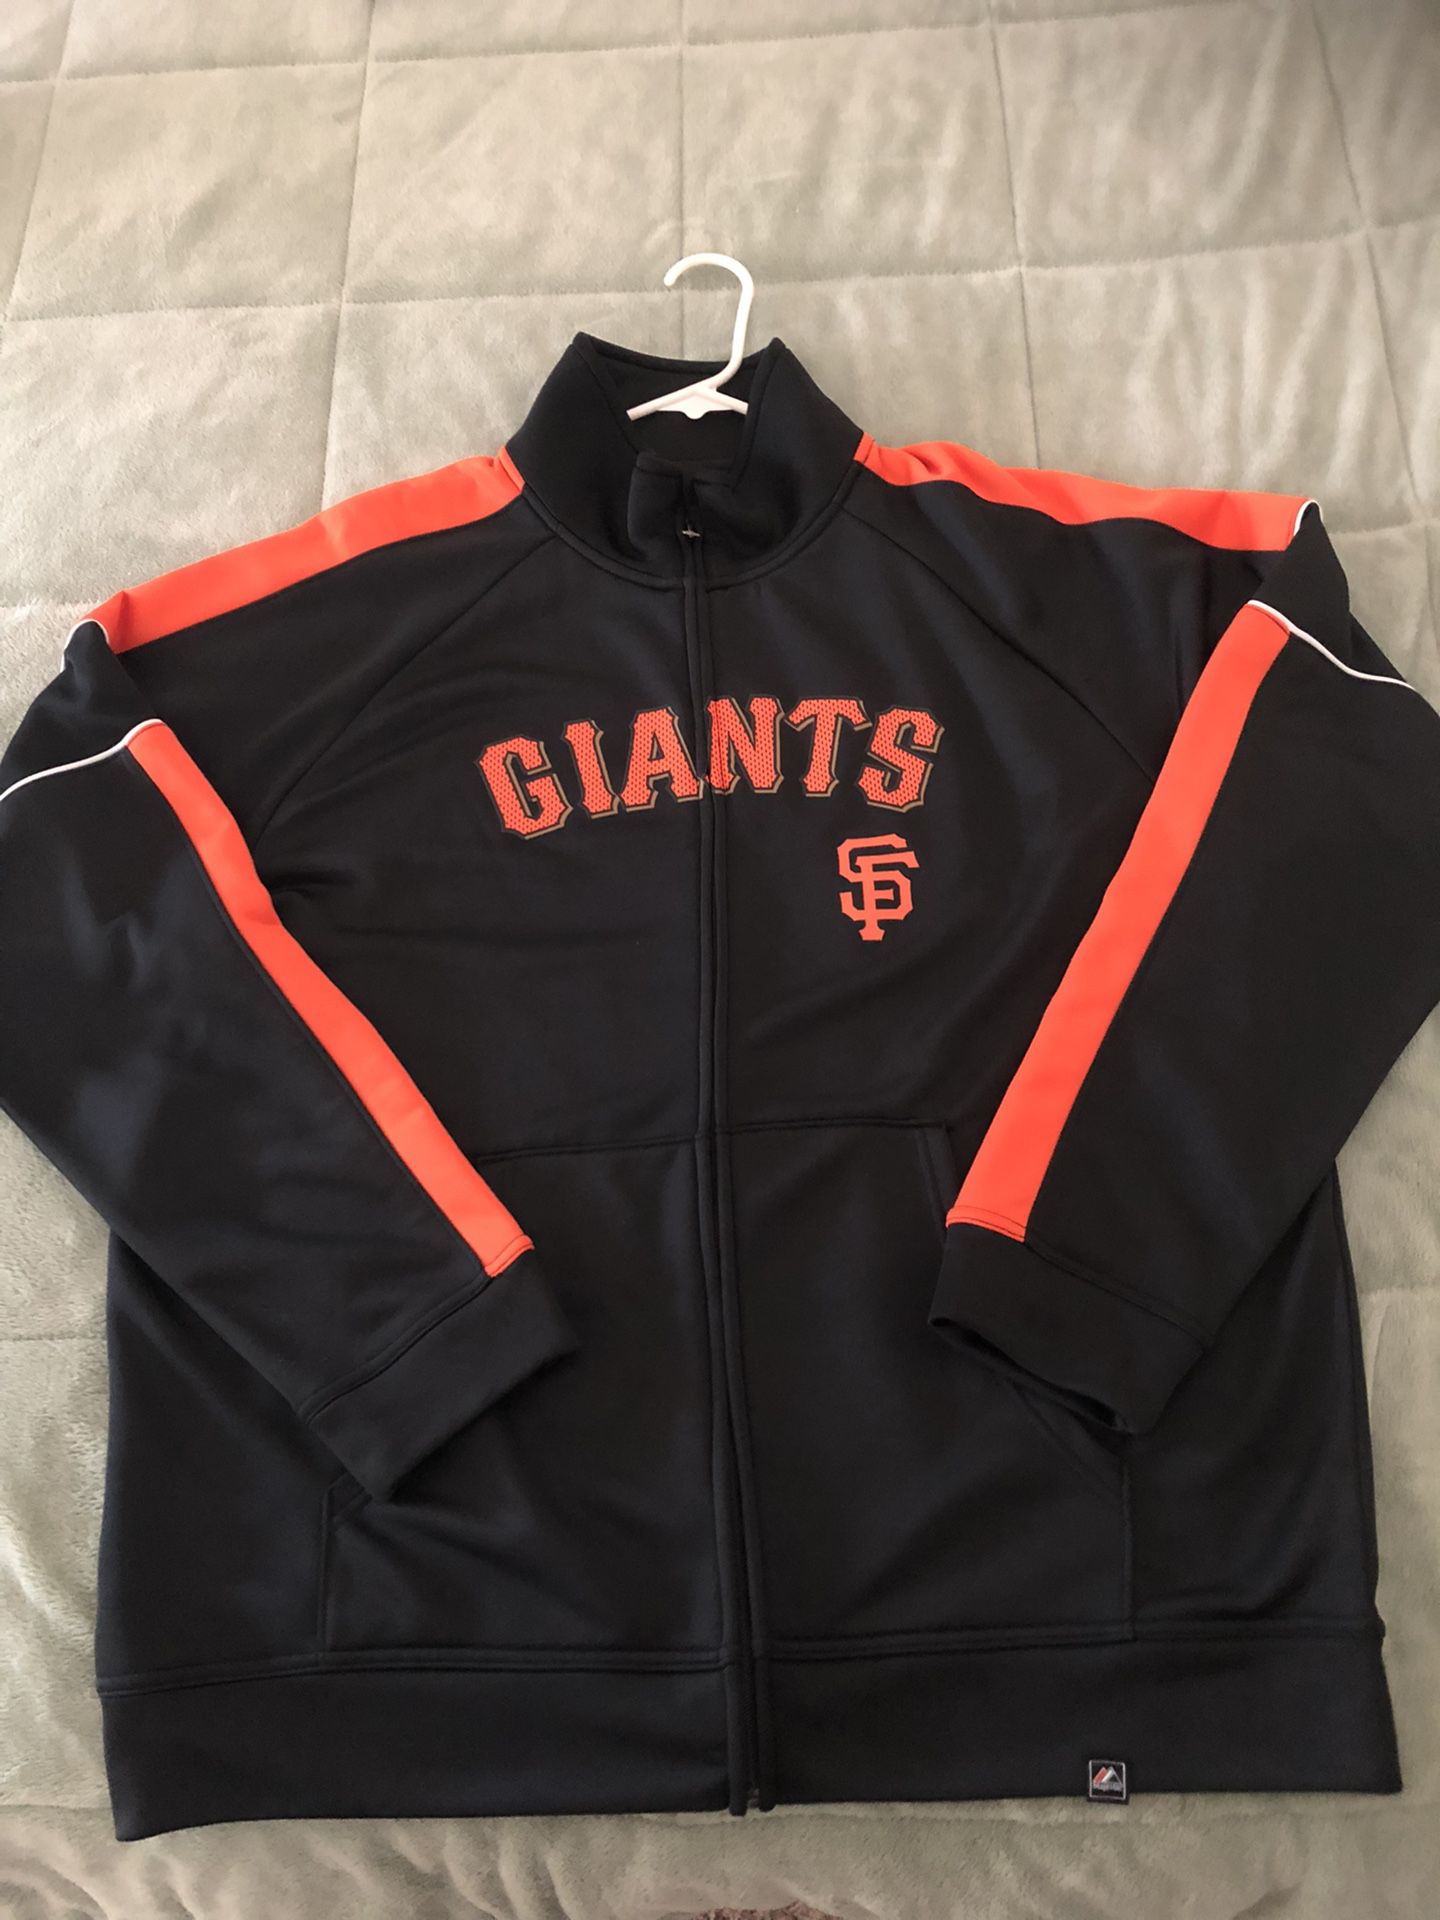 Giants Gear - Large  - Zip Up Sweat Jacket  - No Damage